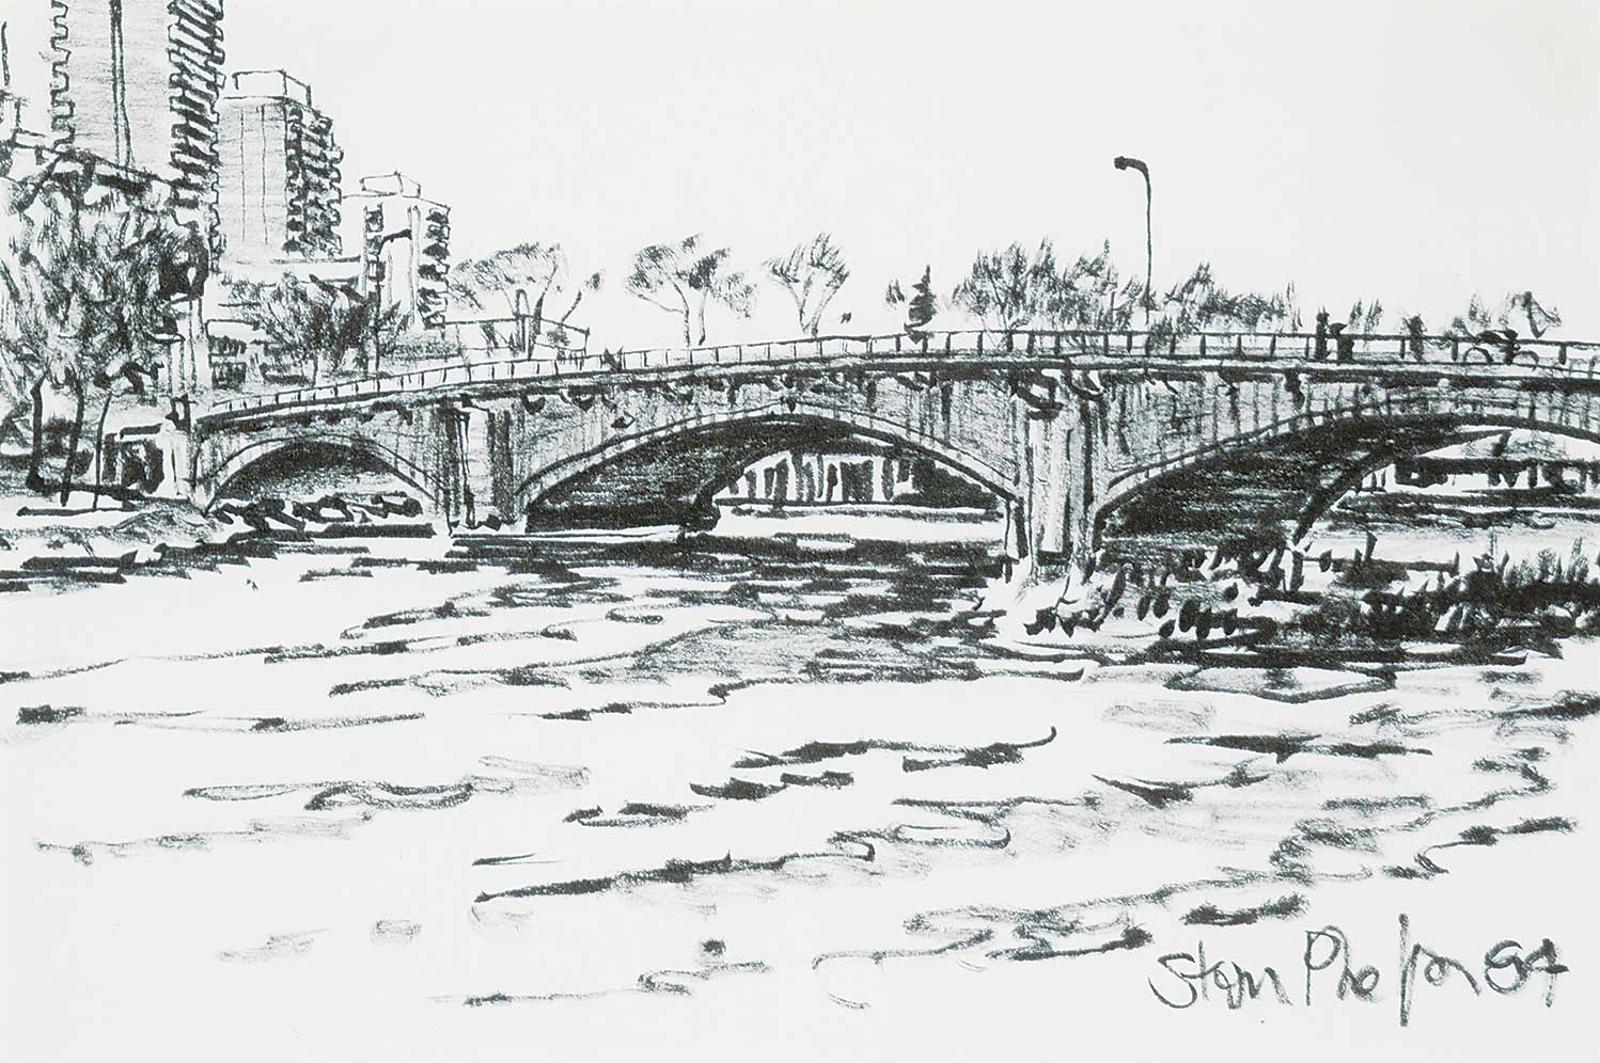 Stan Phelps (1949) - Untitled - 10th Street Bridge, Kensington